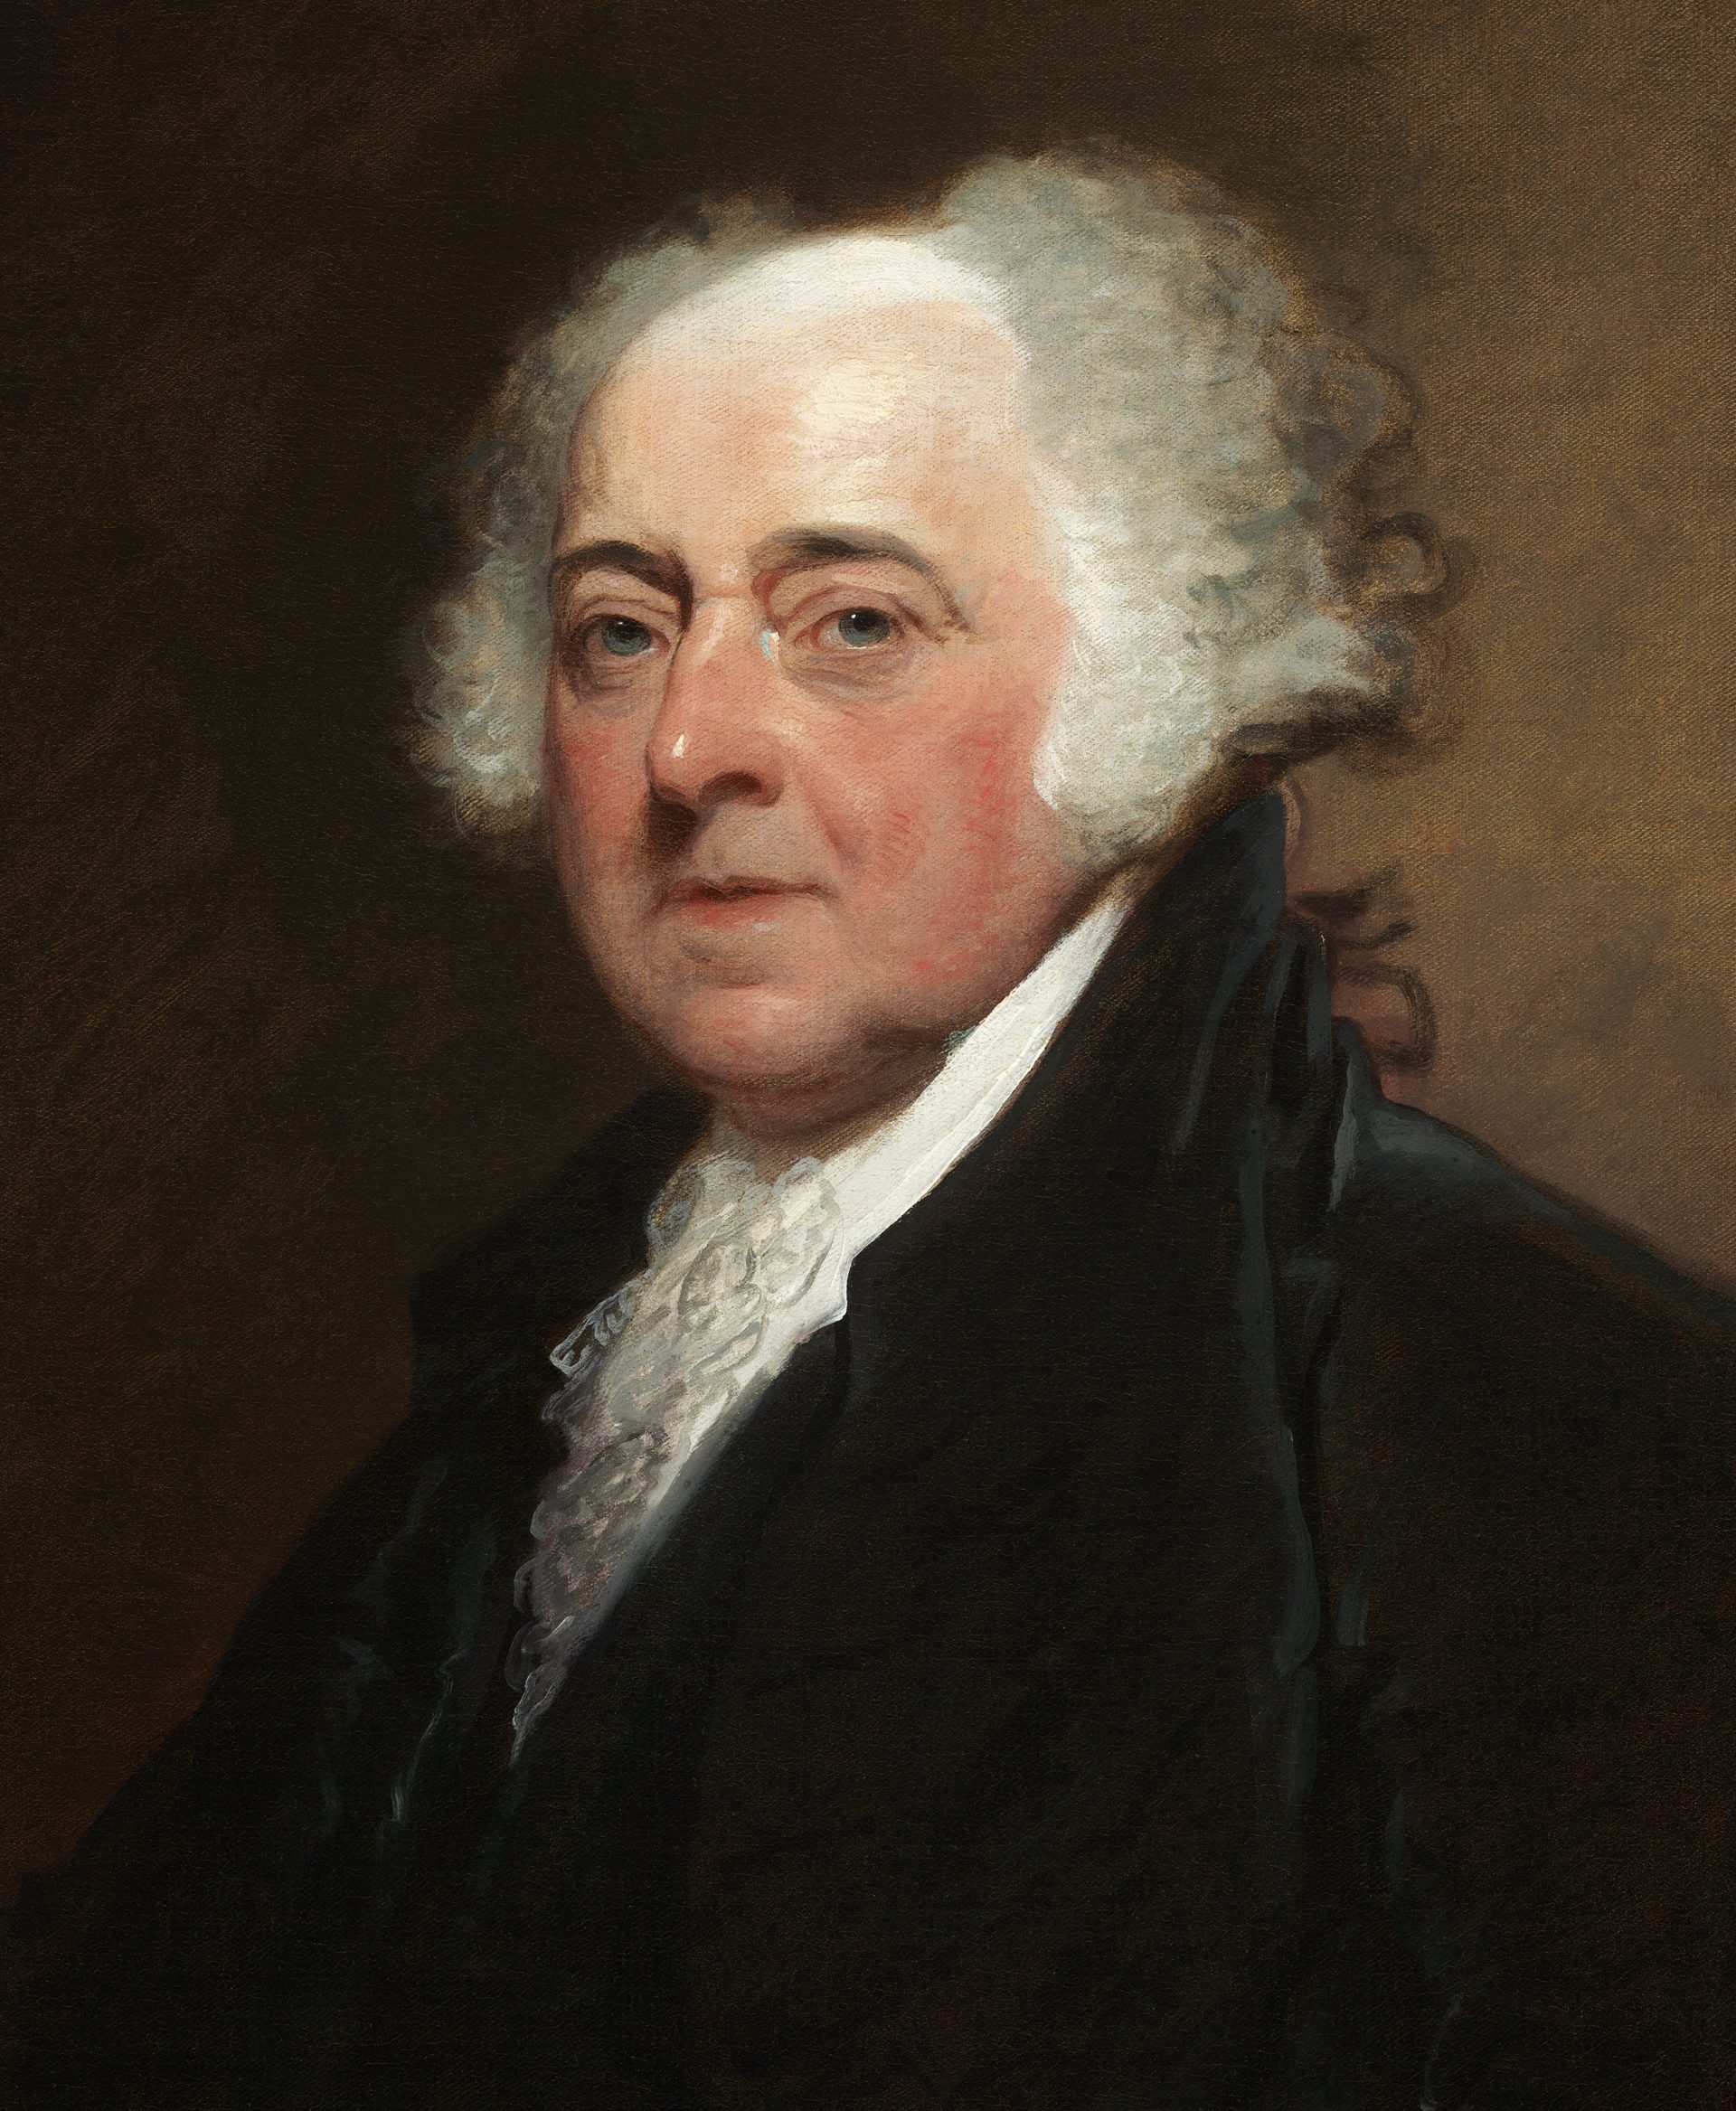 Portrait of John Adams in a black coat and a white cravat.